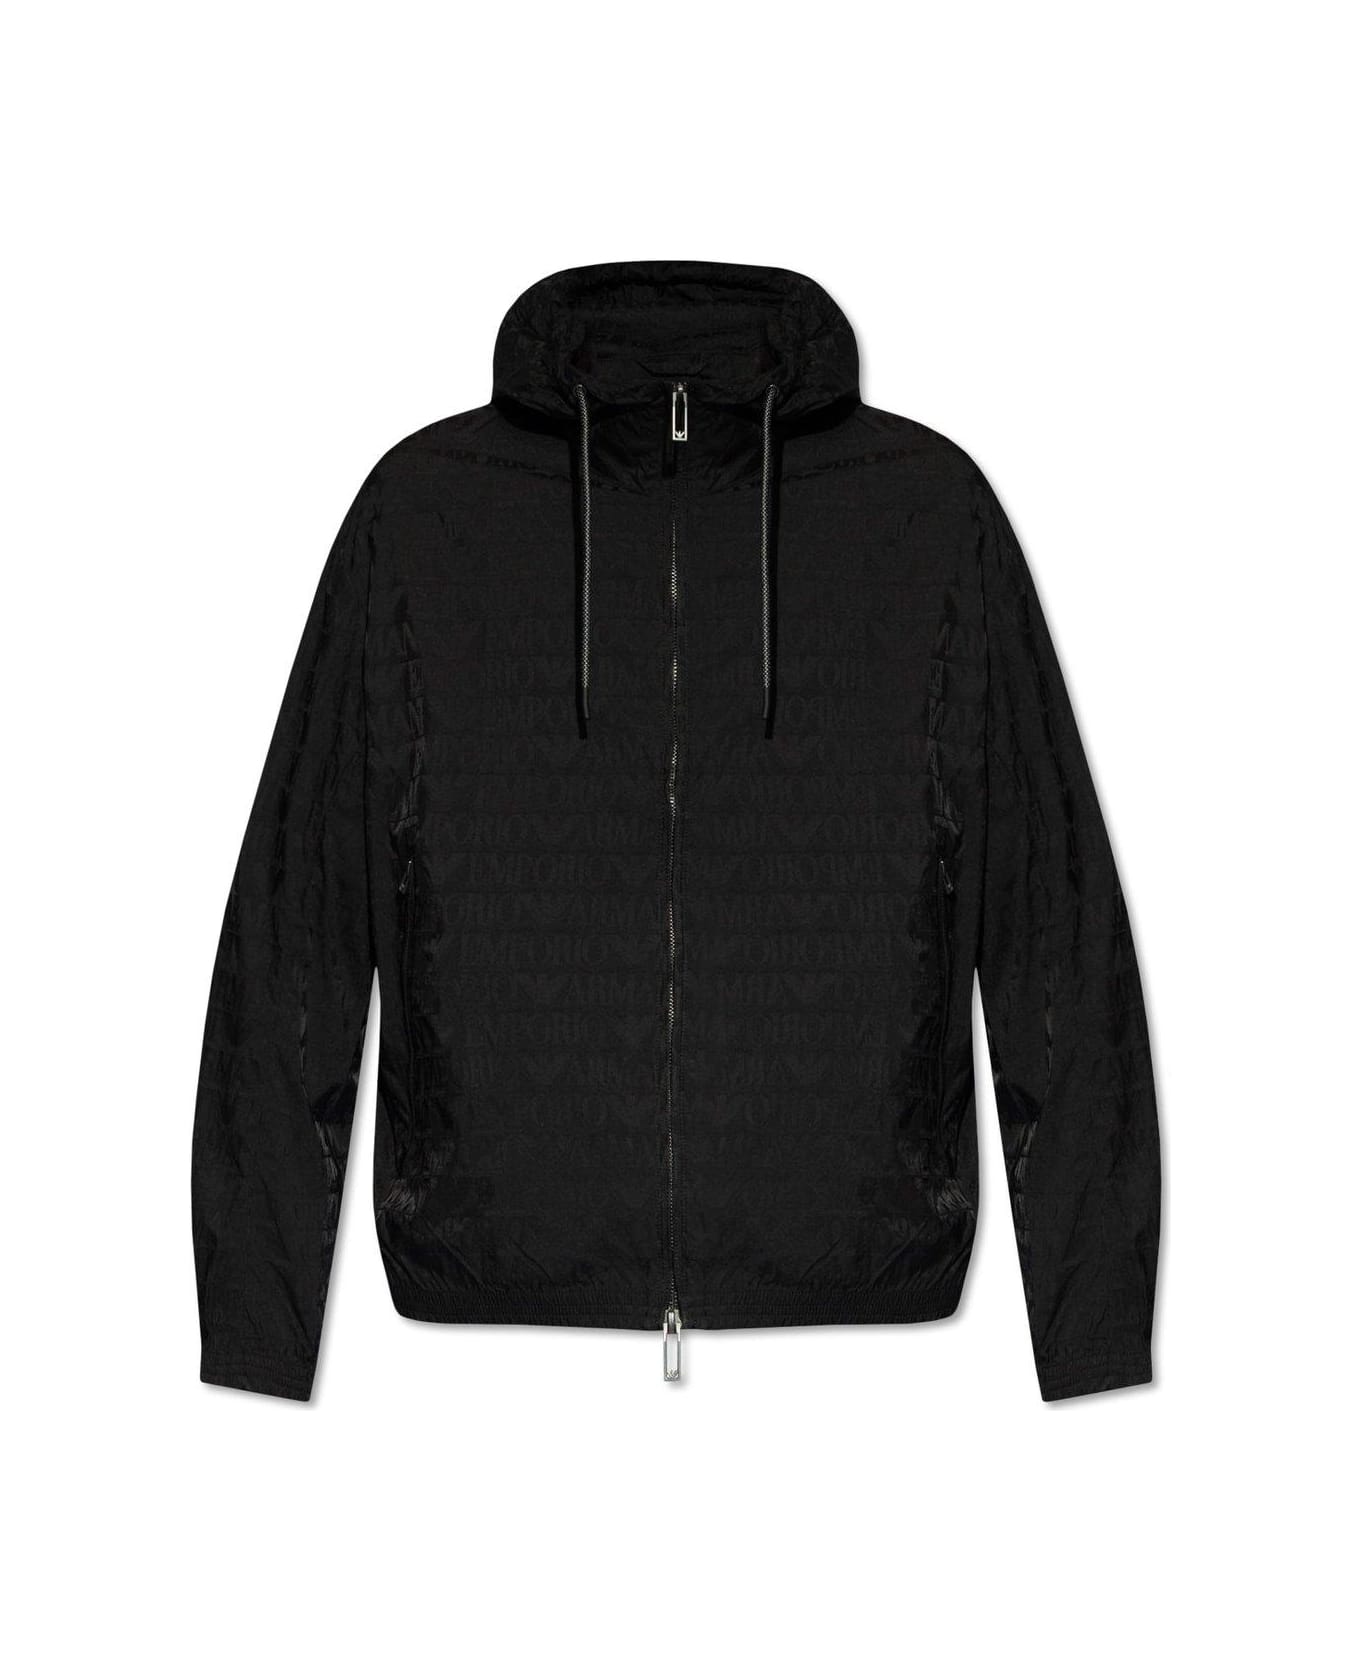 Emporio Armani Hooded Jacket - Black ジャケット